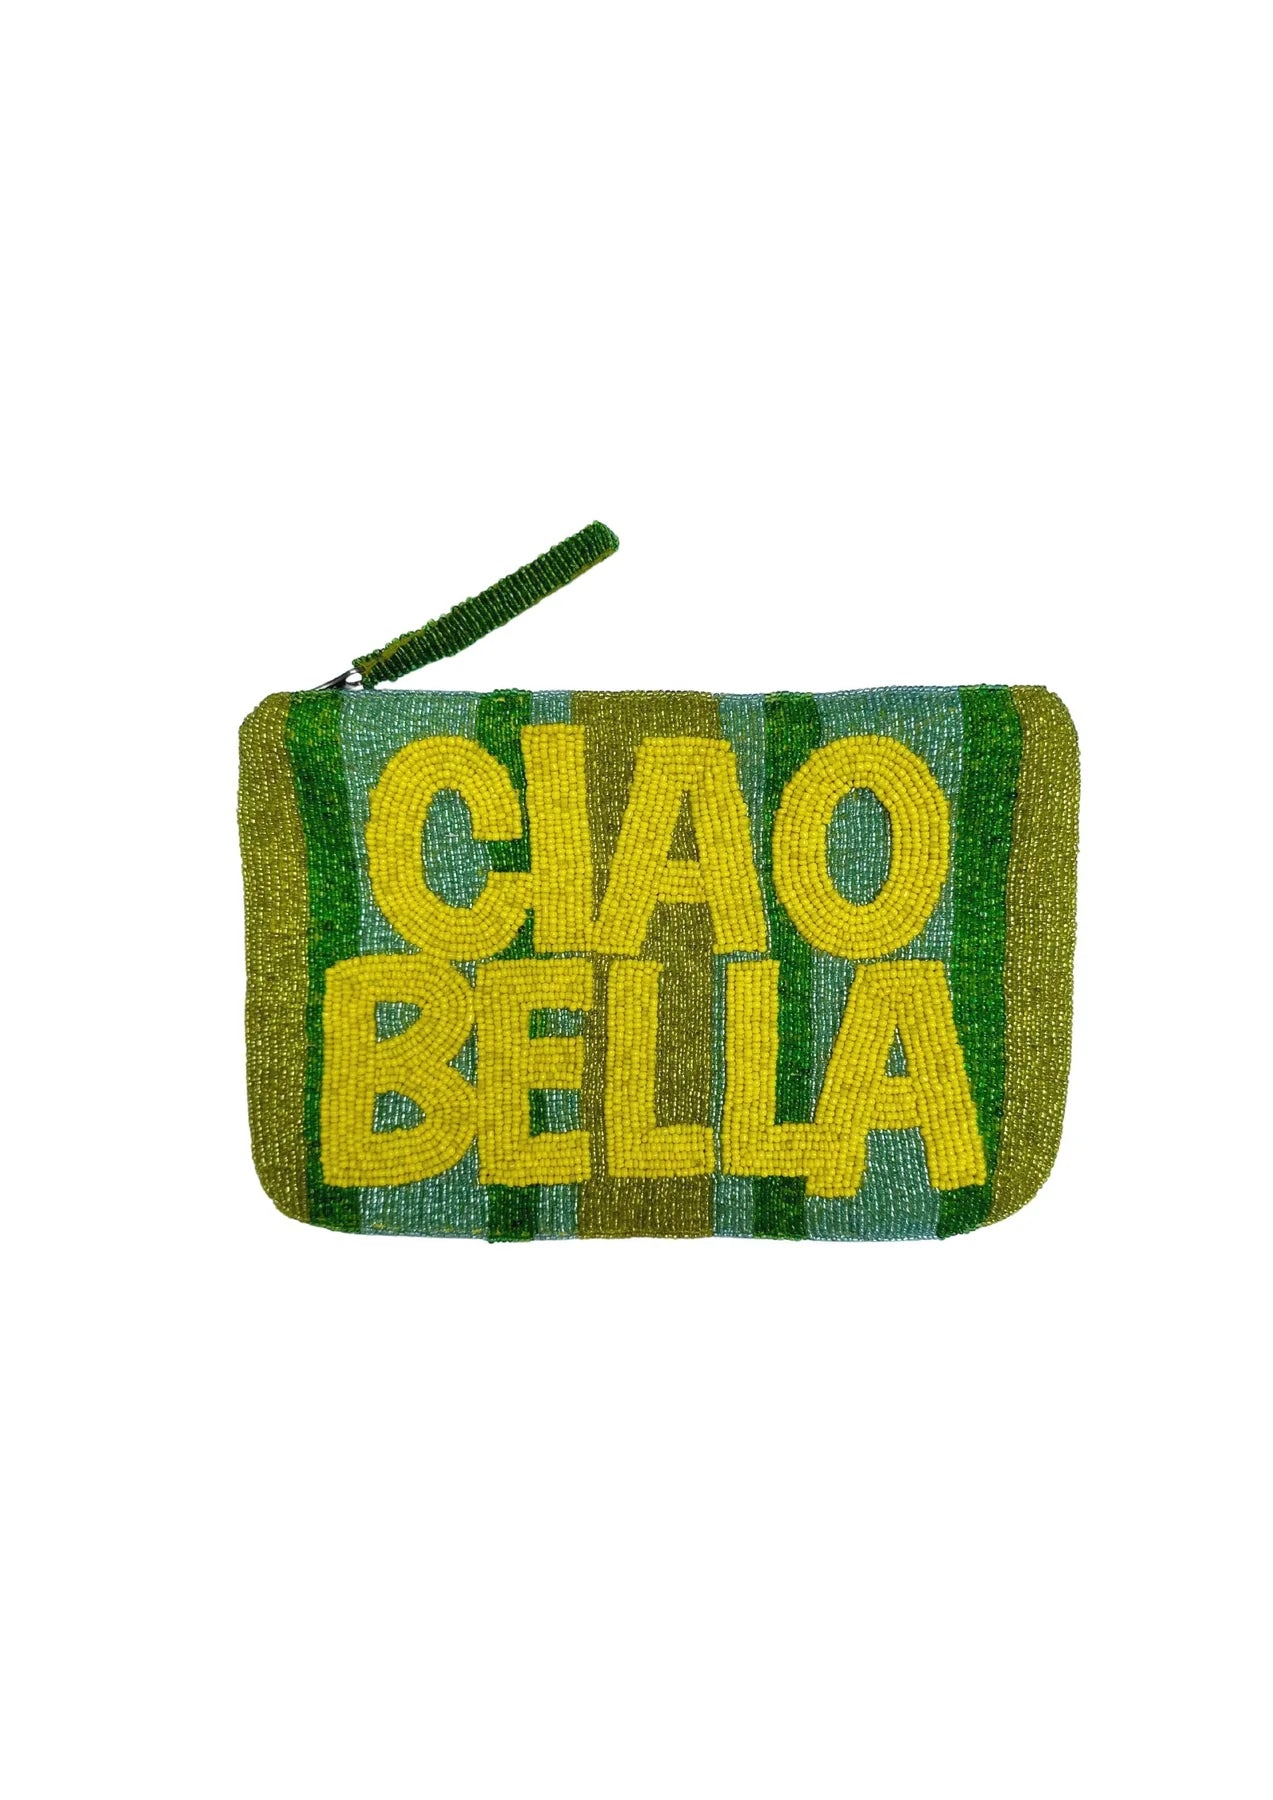 Ciao Bella Beaded Clutch